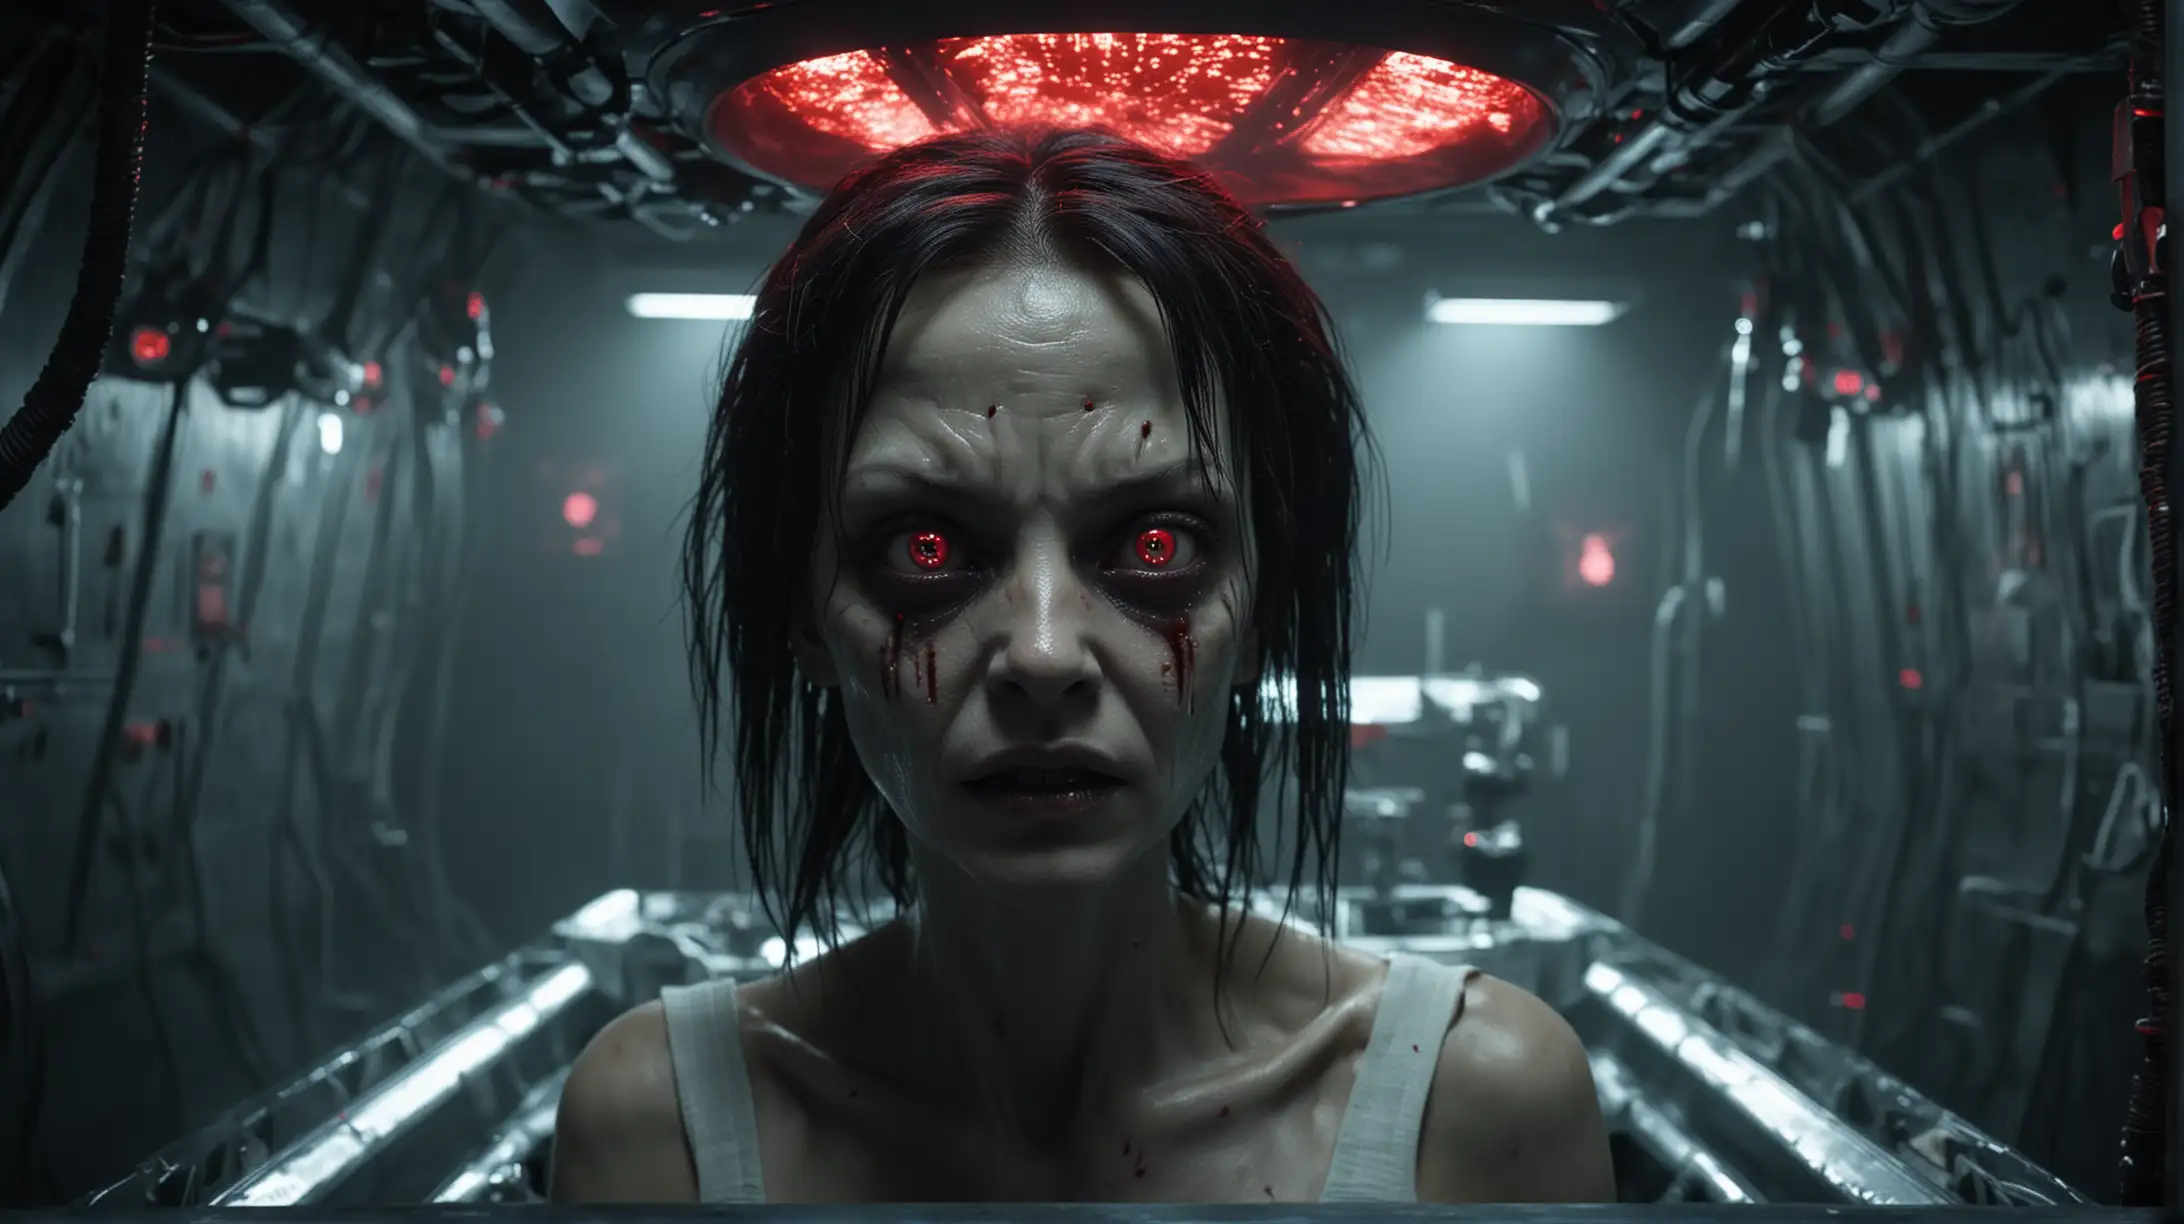 Sinister Alien Operating on Terrified Human in Dark Spaceship Room